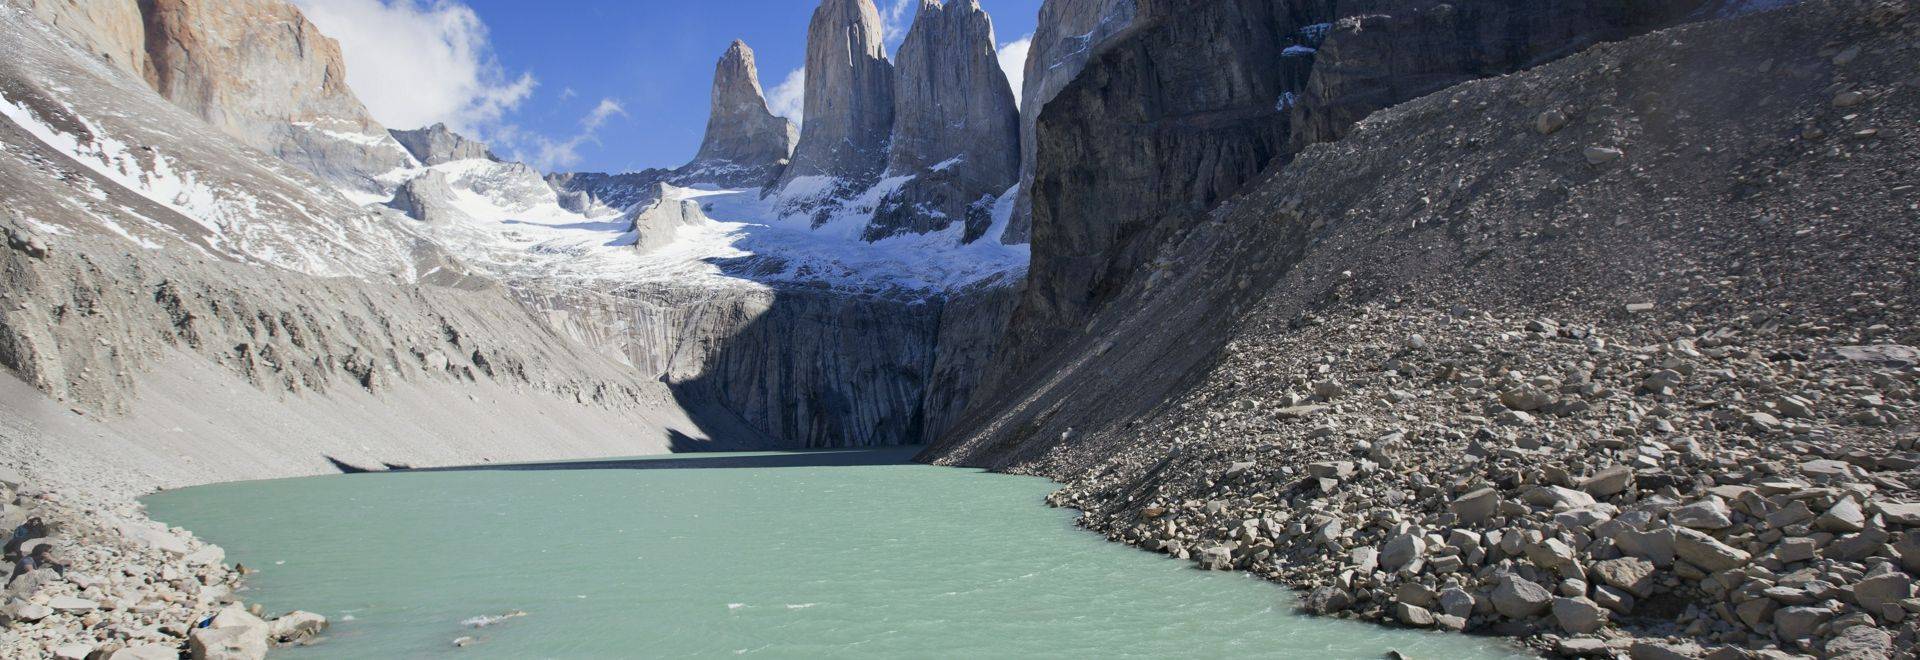 Chile Patagonia Torres Del Paine Mountain Lagoon-Shereen Mroueh 2014-IMG5861-Edit Lg RGB.jpg